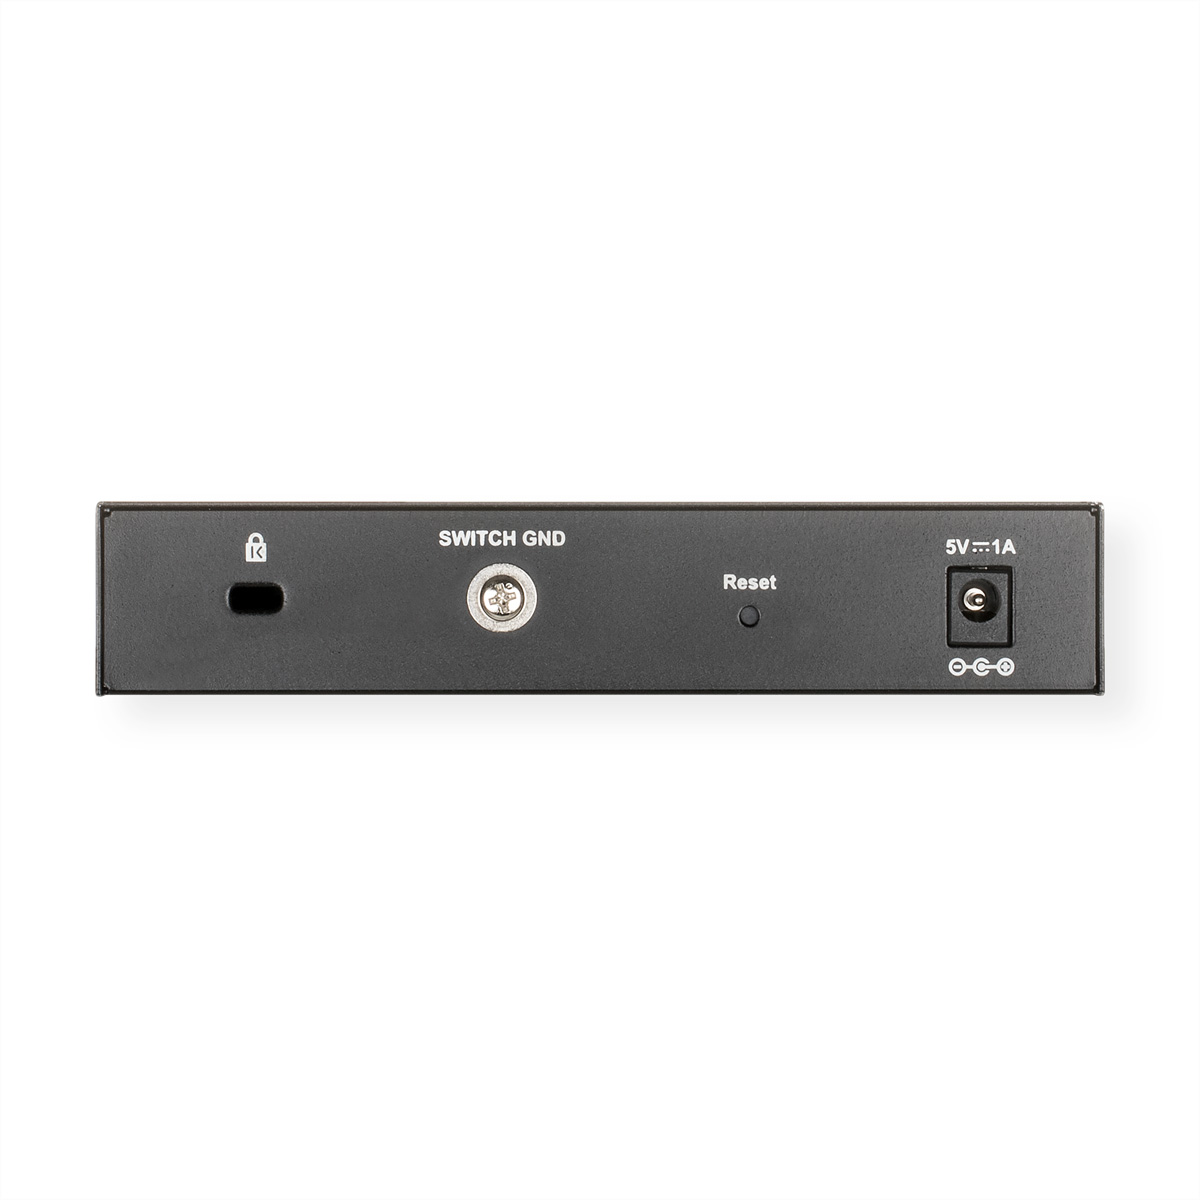 Ethernet Gigabit Managed Gigabit D-LINK Switch DGS-1100-08V2/E Smart Switch